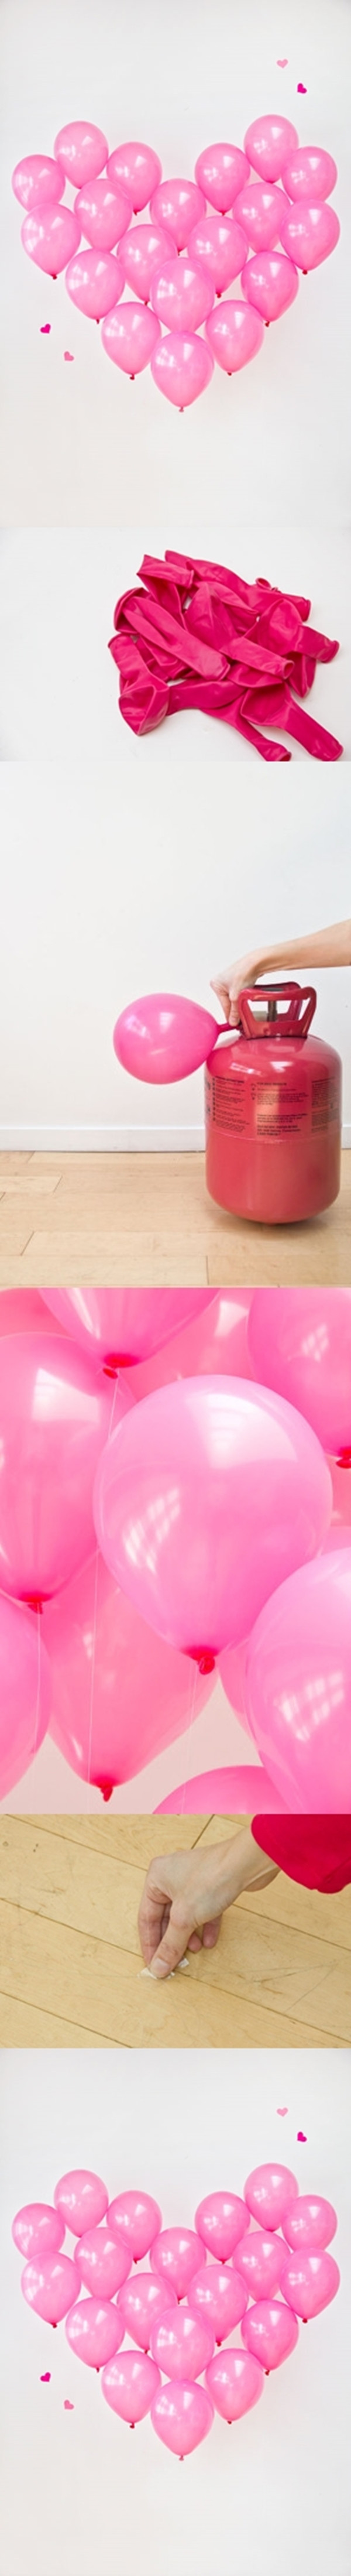 Abkürzung Diy
 DIY gefüllte Luftballons Deko Ideen perfekte Partyartikel